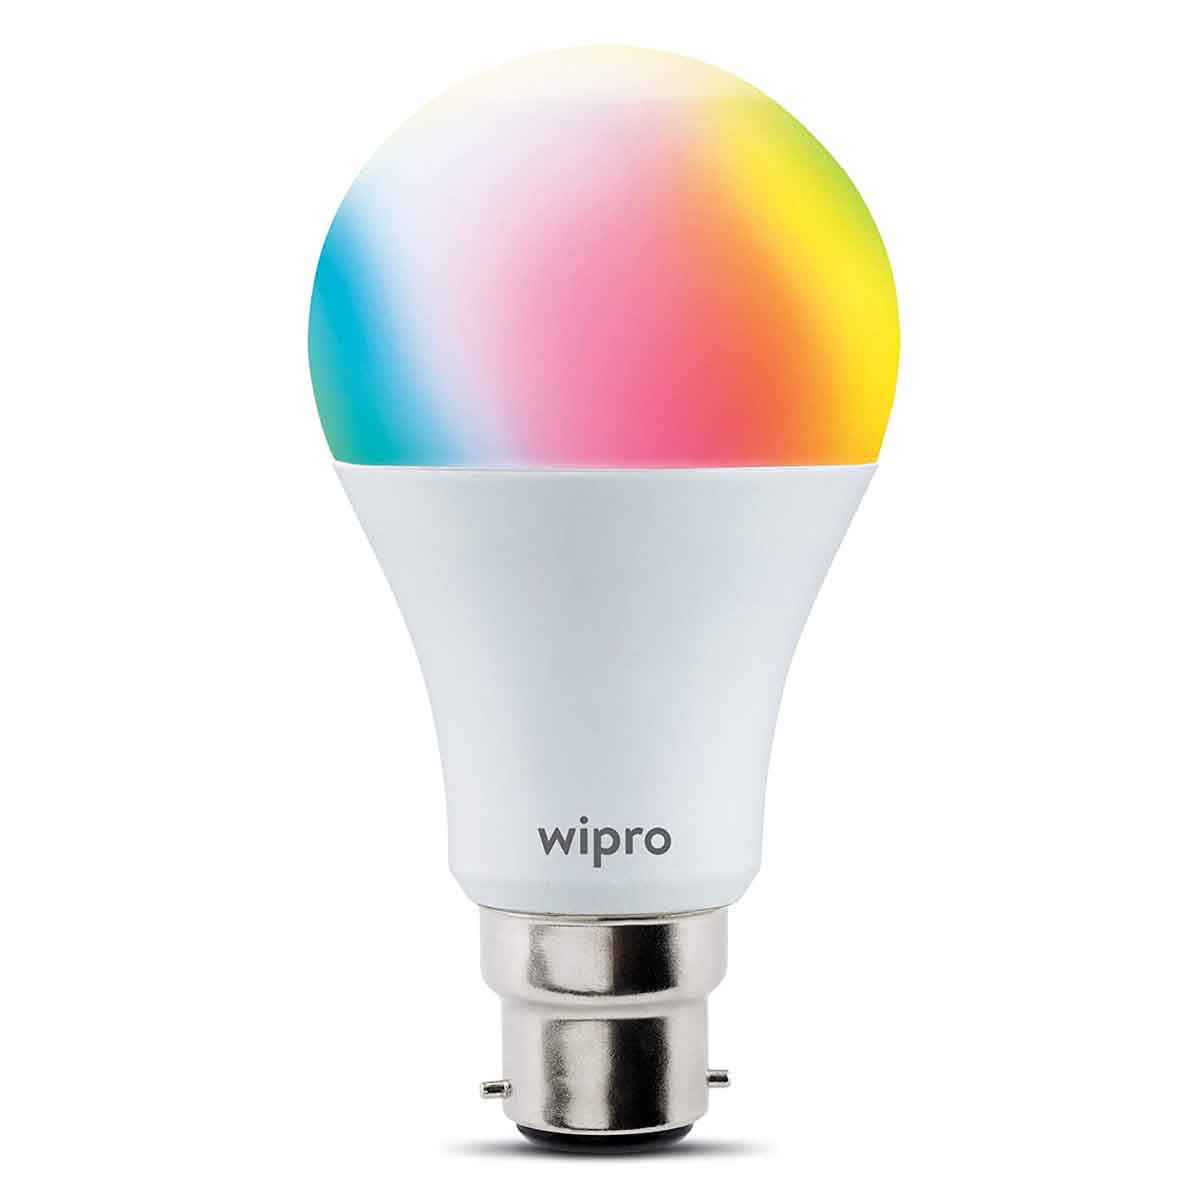 Wipro Next 20 Watt Smart LED Batten Light SmartLights Price in India